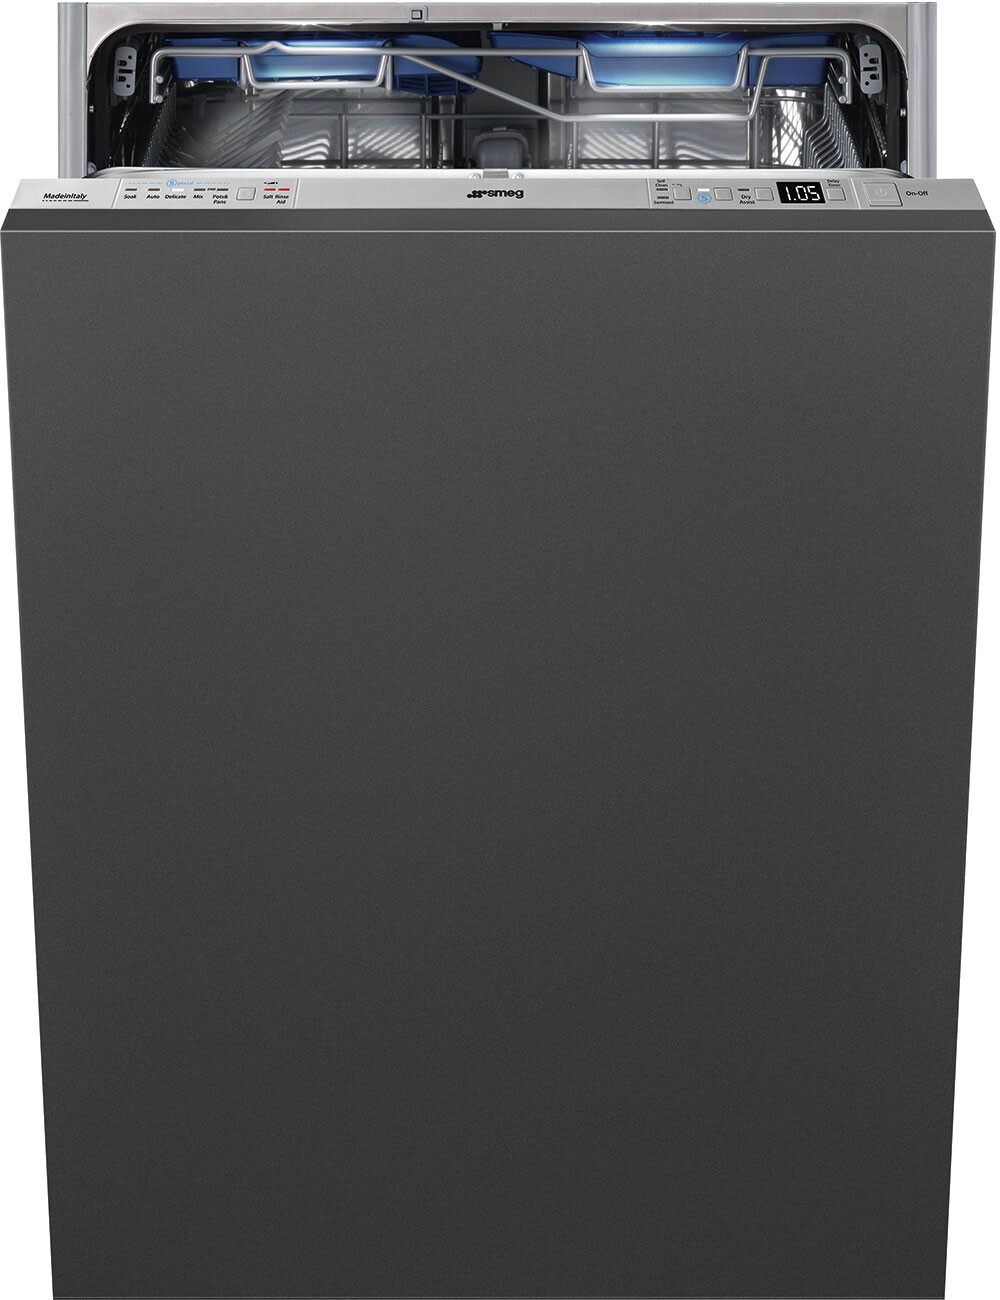 Smeg 24 Fully Integrated Built In Dishwasher STU8633